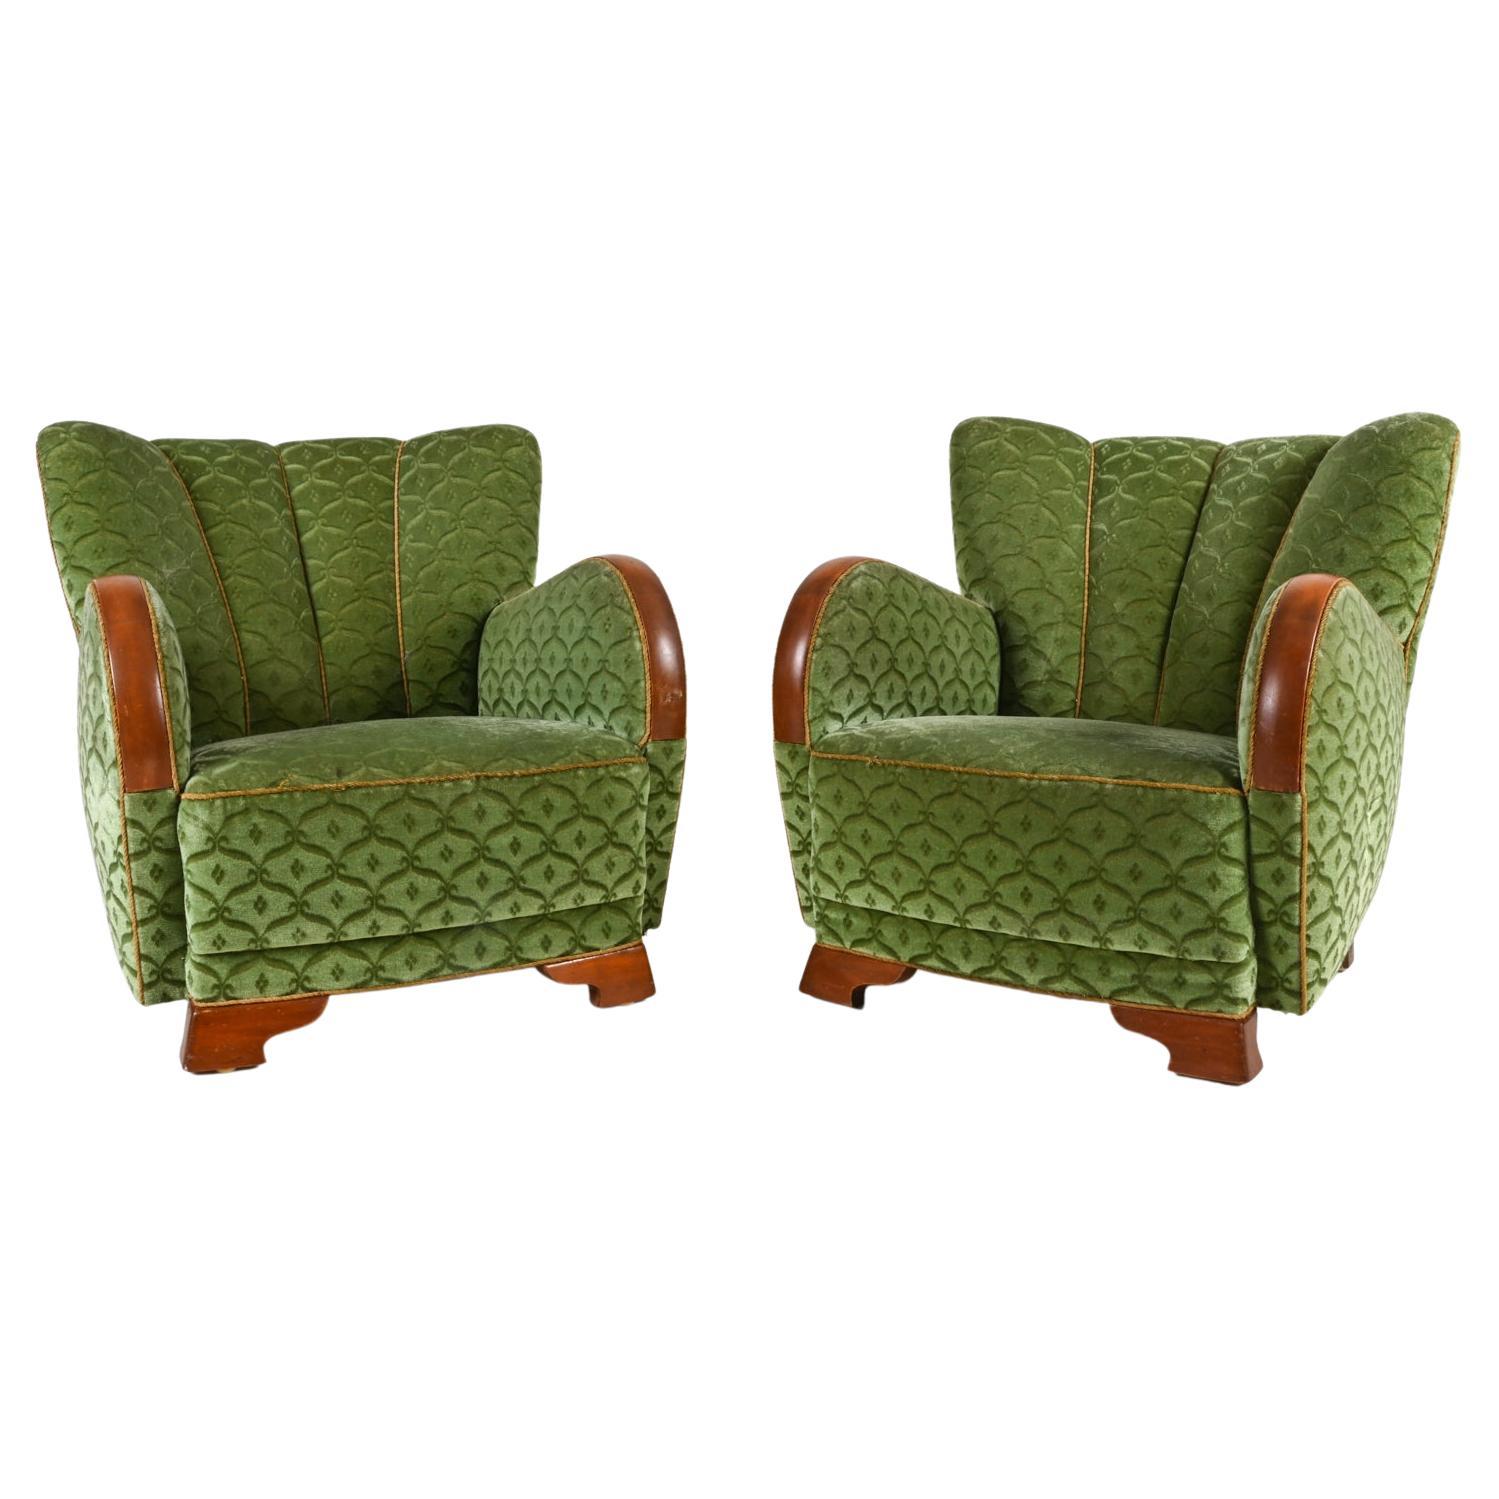 Pair of Mogens Lassen Style Danish Midcentury Lounge or Club Chairs, 1940s